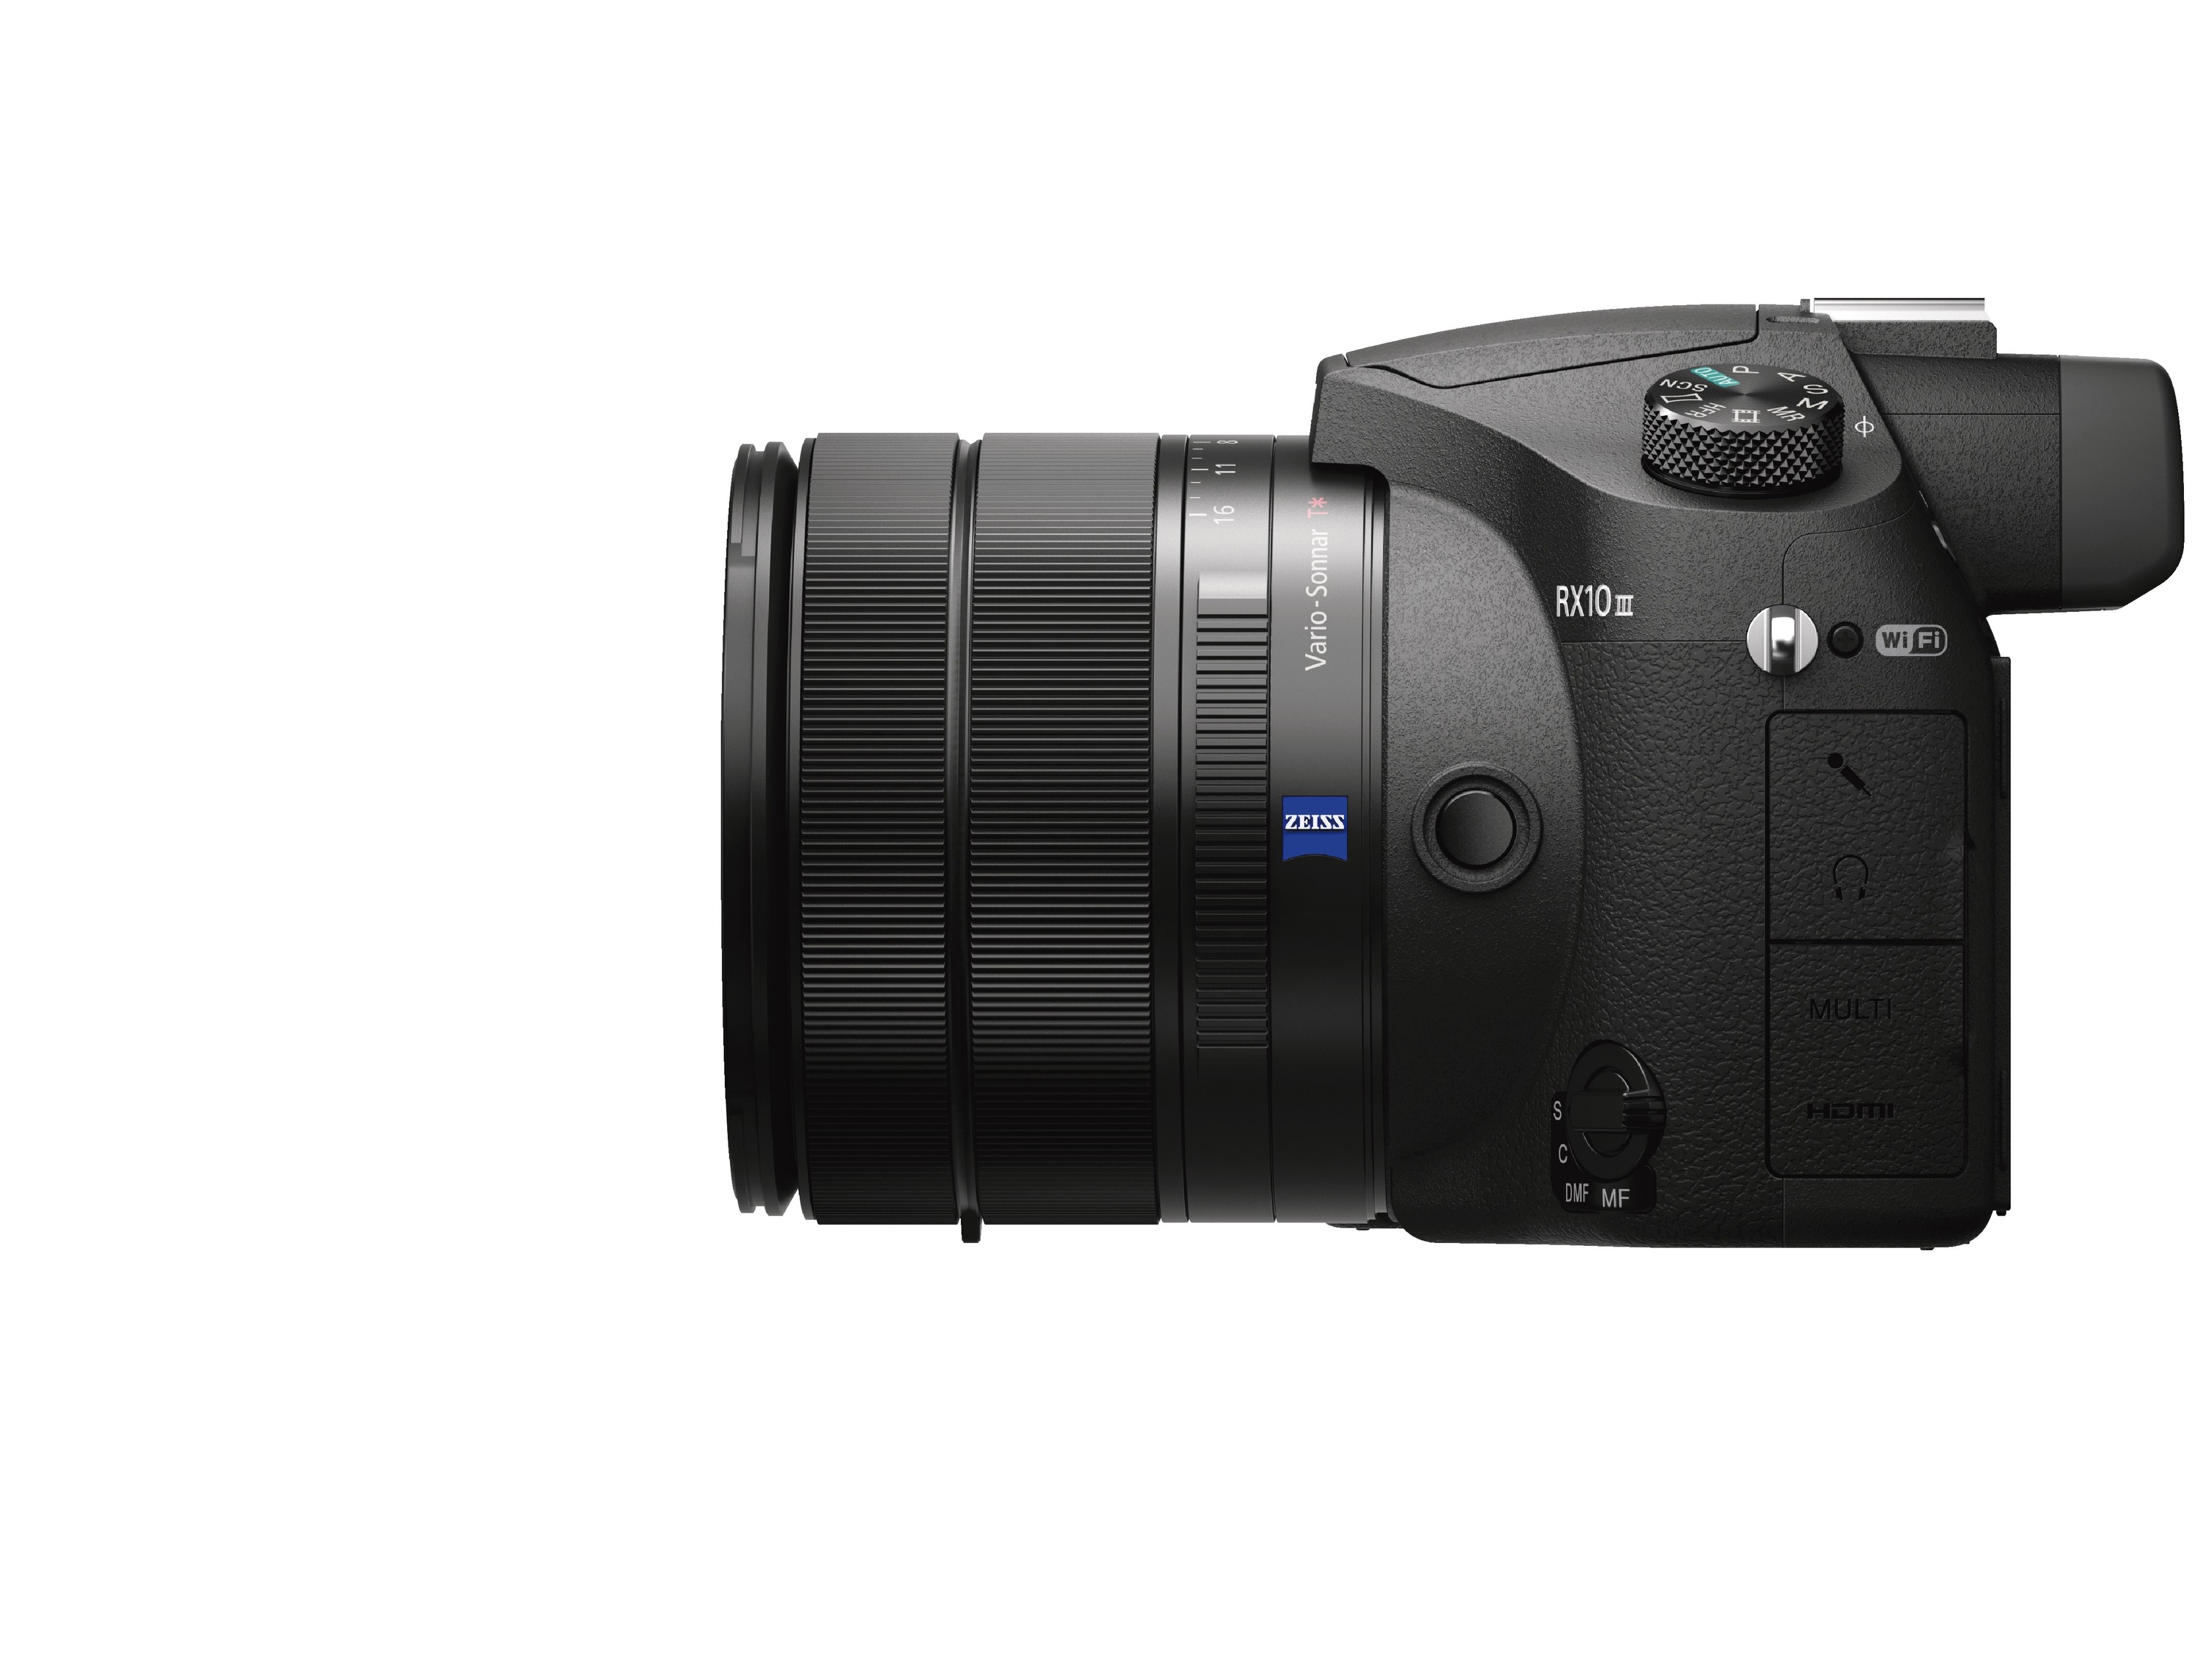 Sony DSC-RX10M3/B Cyber-shot Digital Camera RX10 III 20.1 MP Wi-Fi NFC | eBay